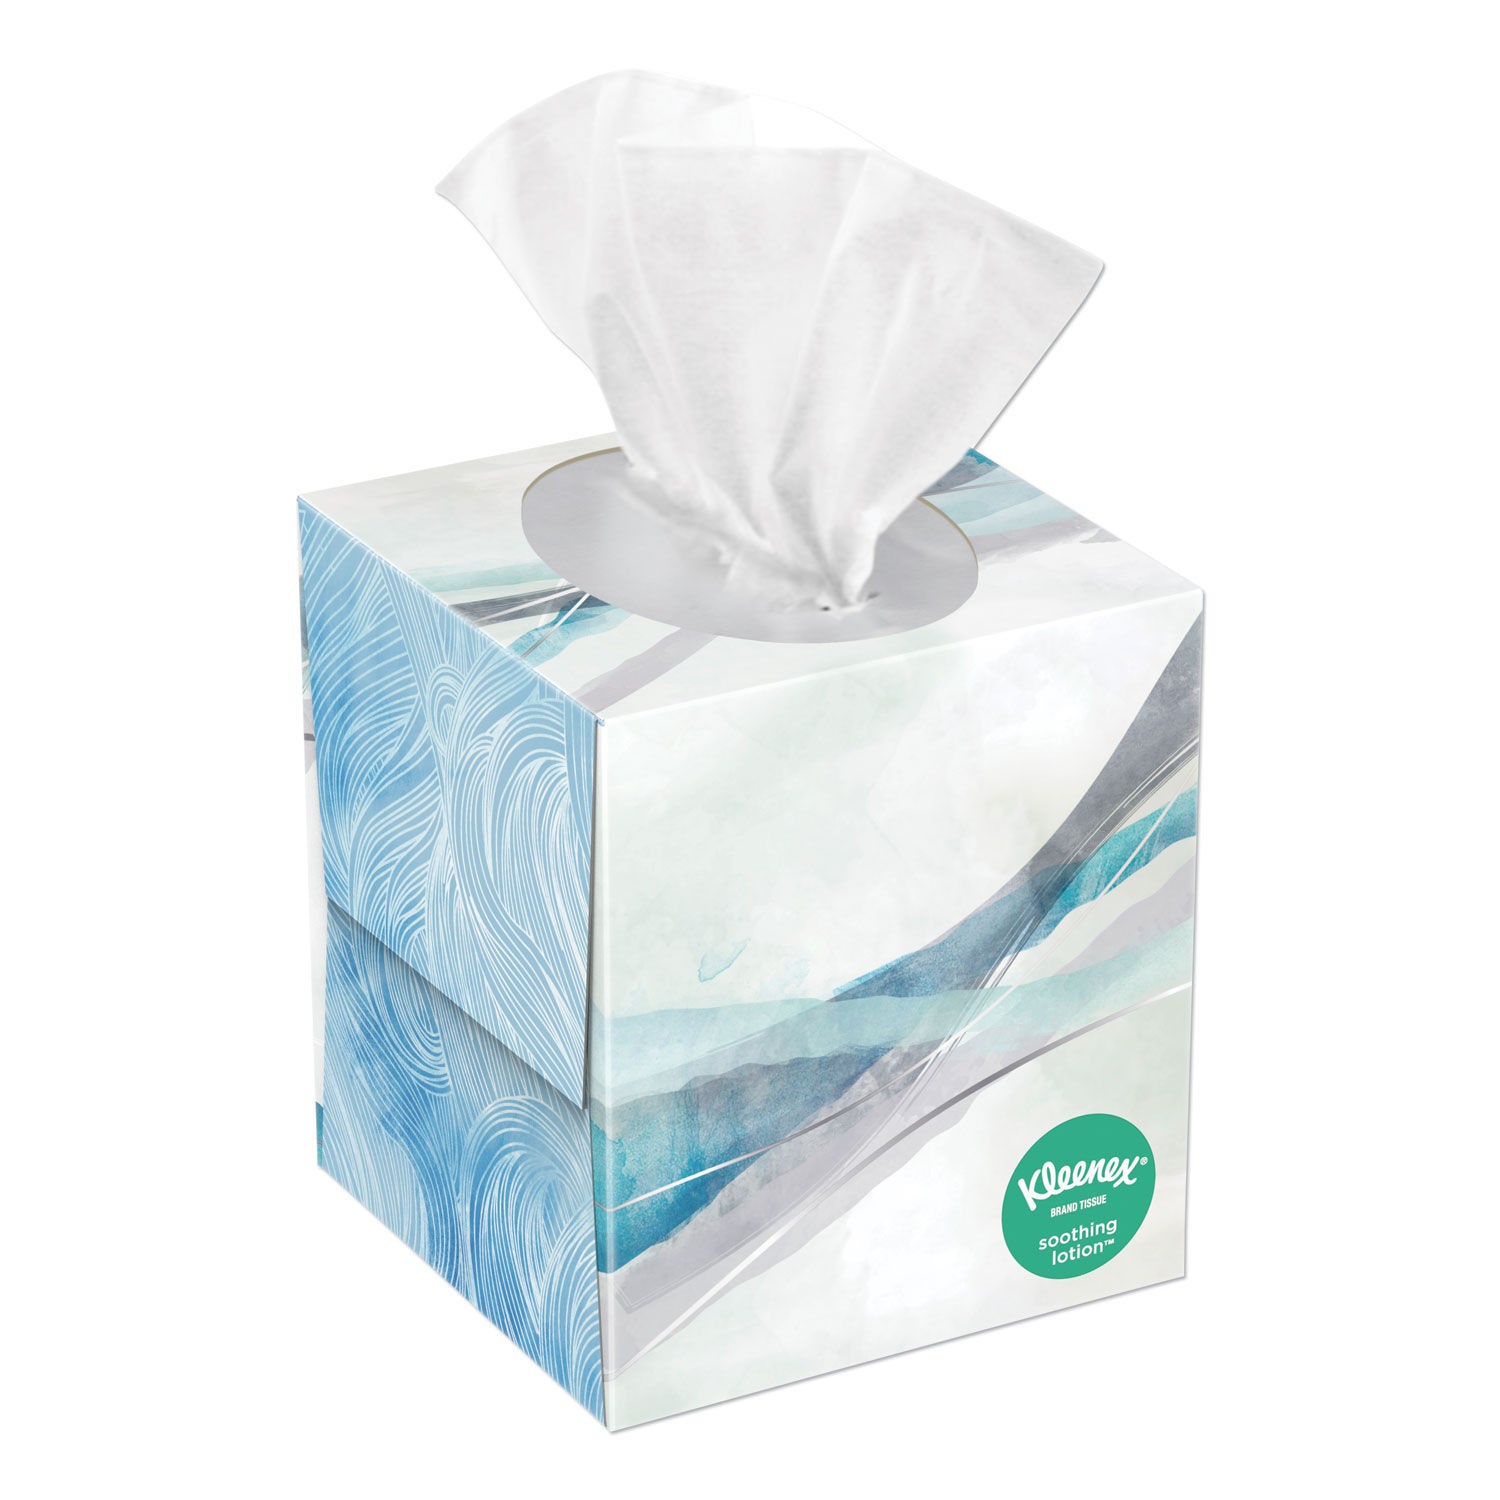 Kleenex Facial Tissue Convenience Case 2-ply, White, 12-count